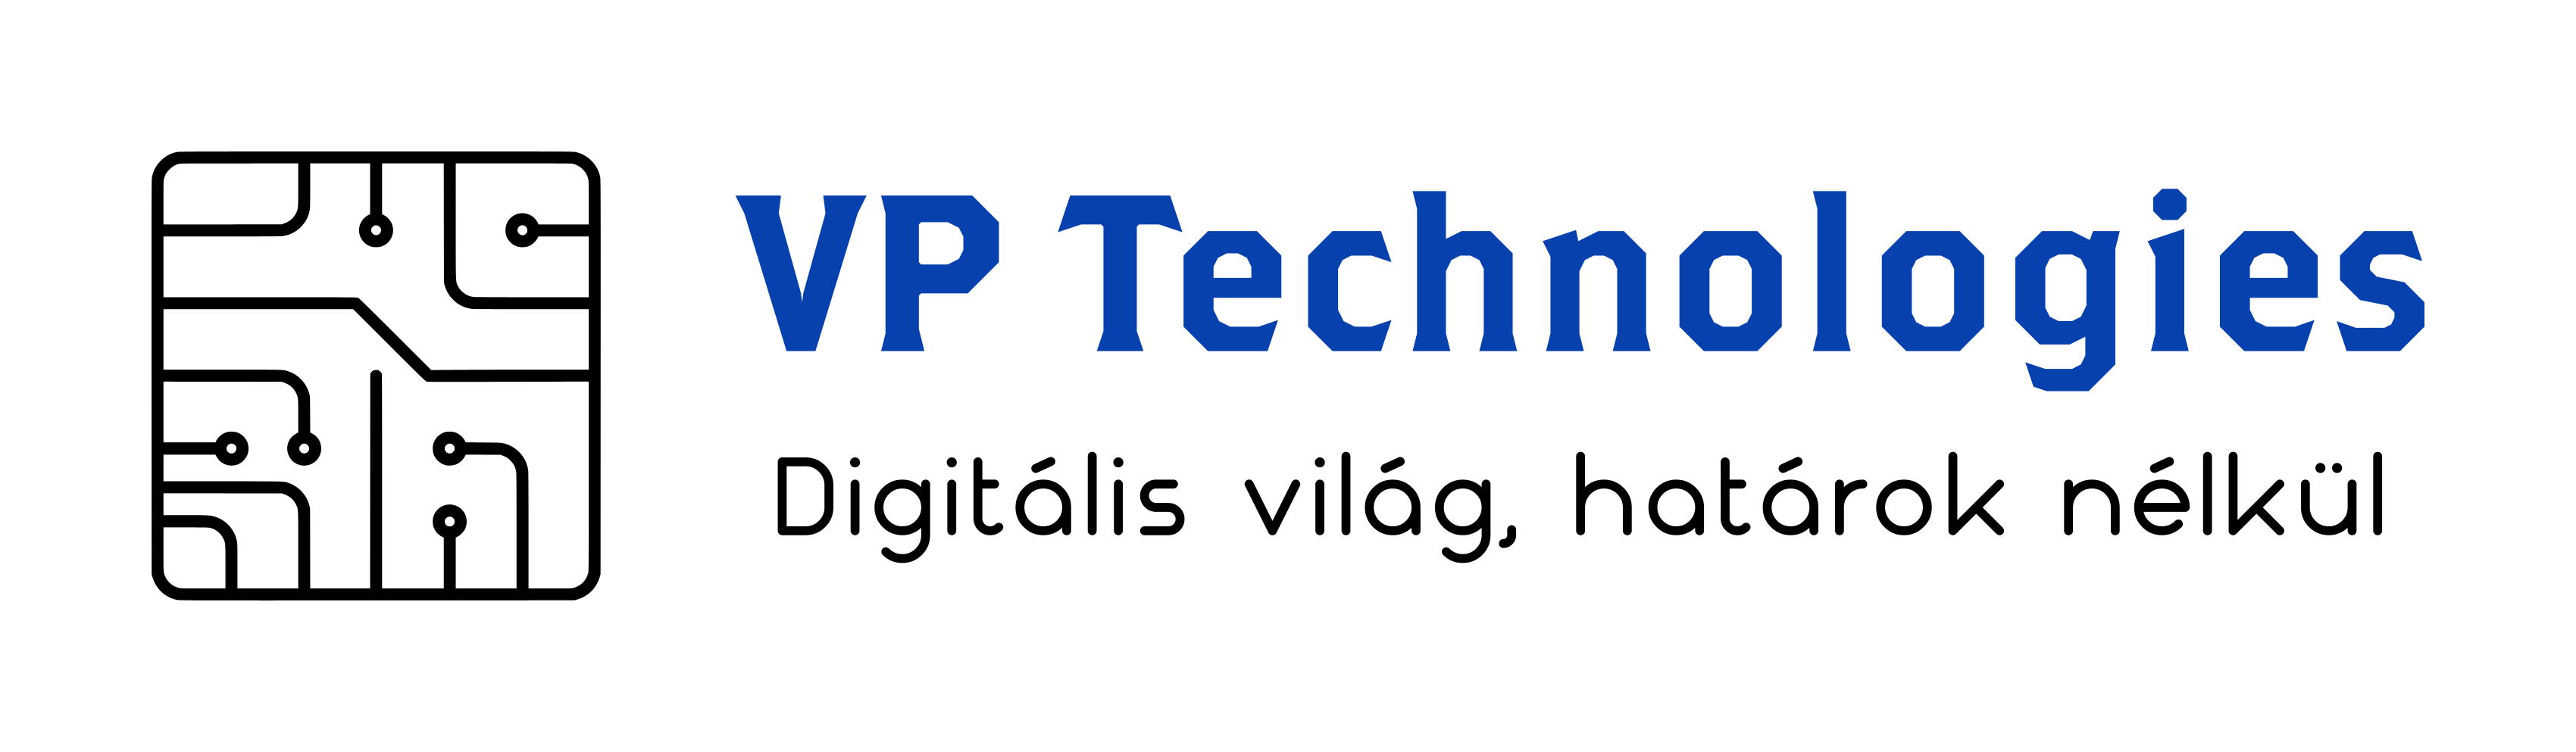 VP Technologies